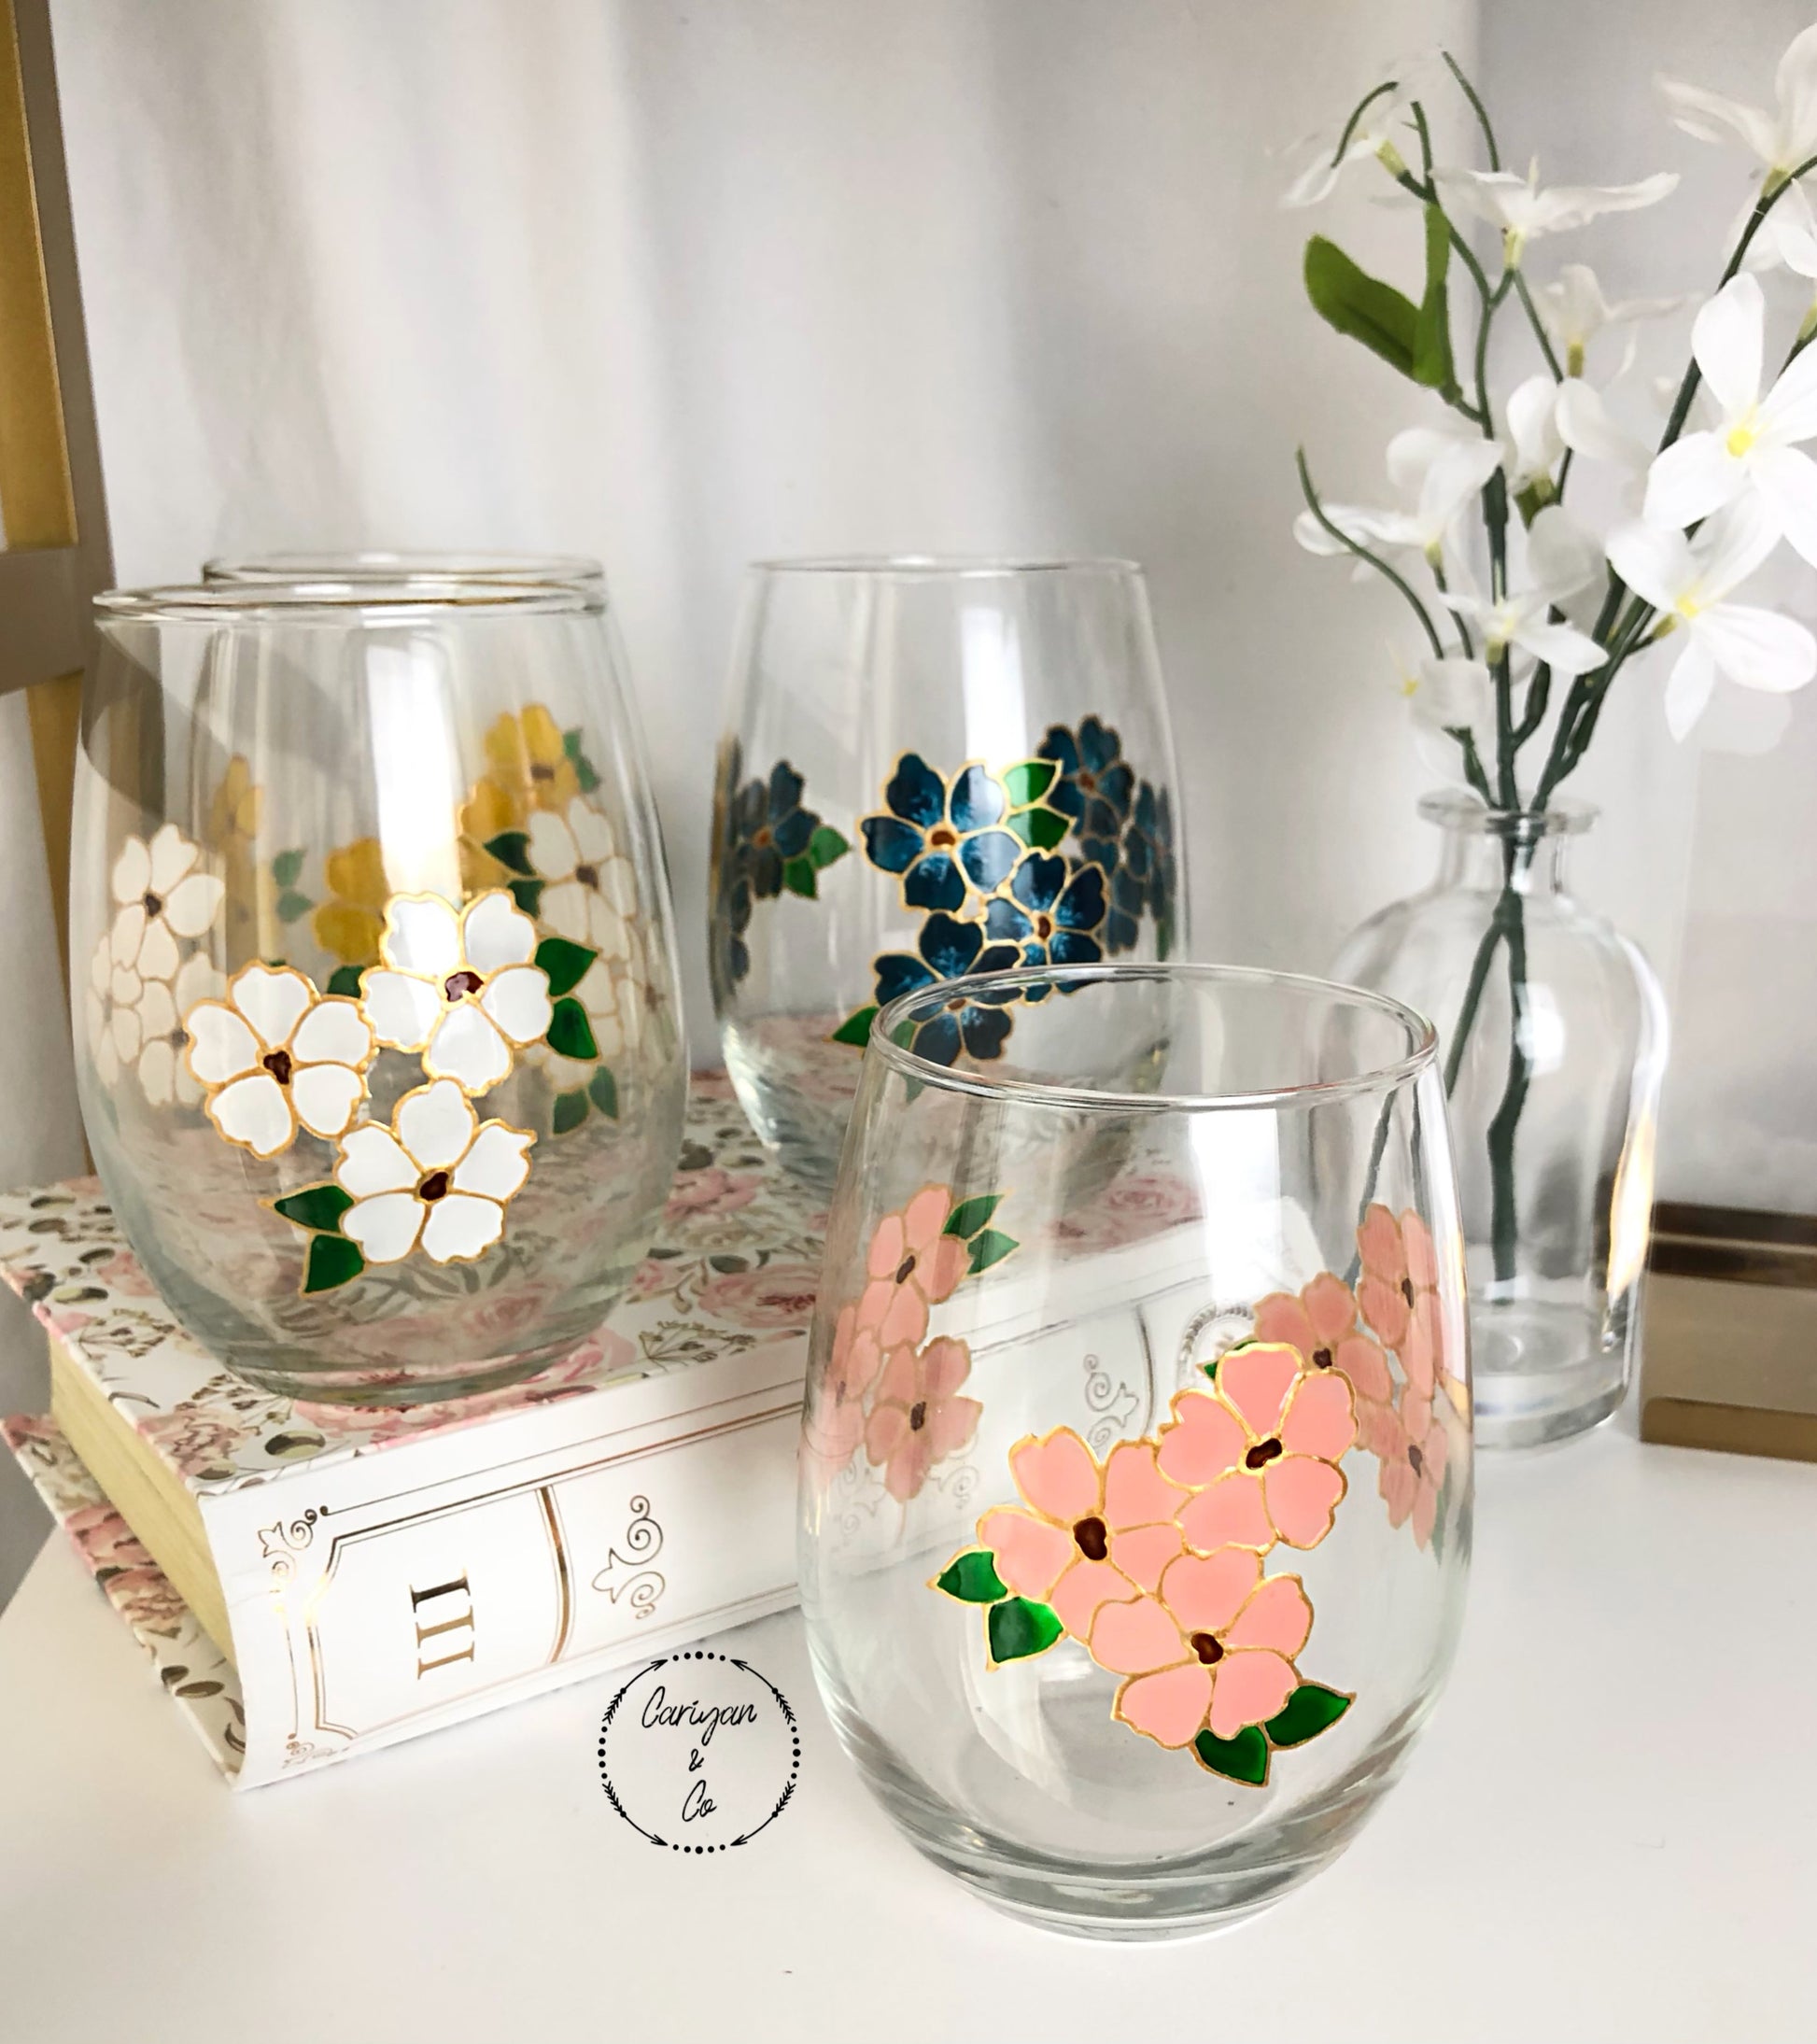 Stemless Wine Glass, Boho Rainbow Stemless Wine Glasses, Housewarming Gift,  Summer Spring Wine Glasses, Hand Painted Glasses 